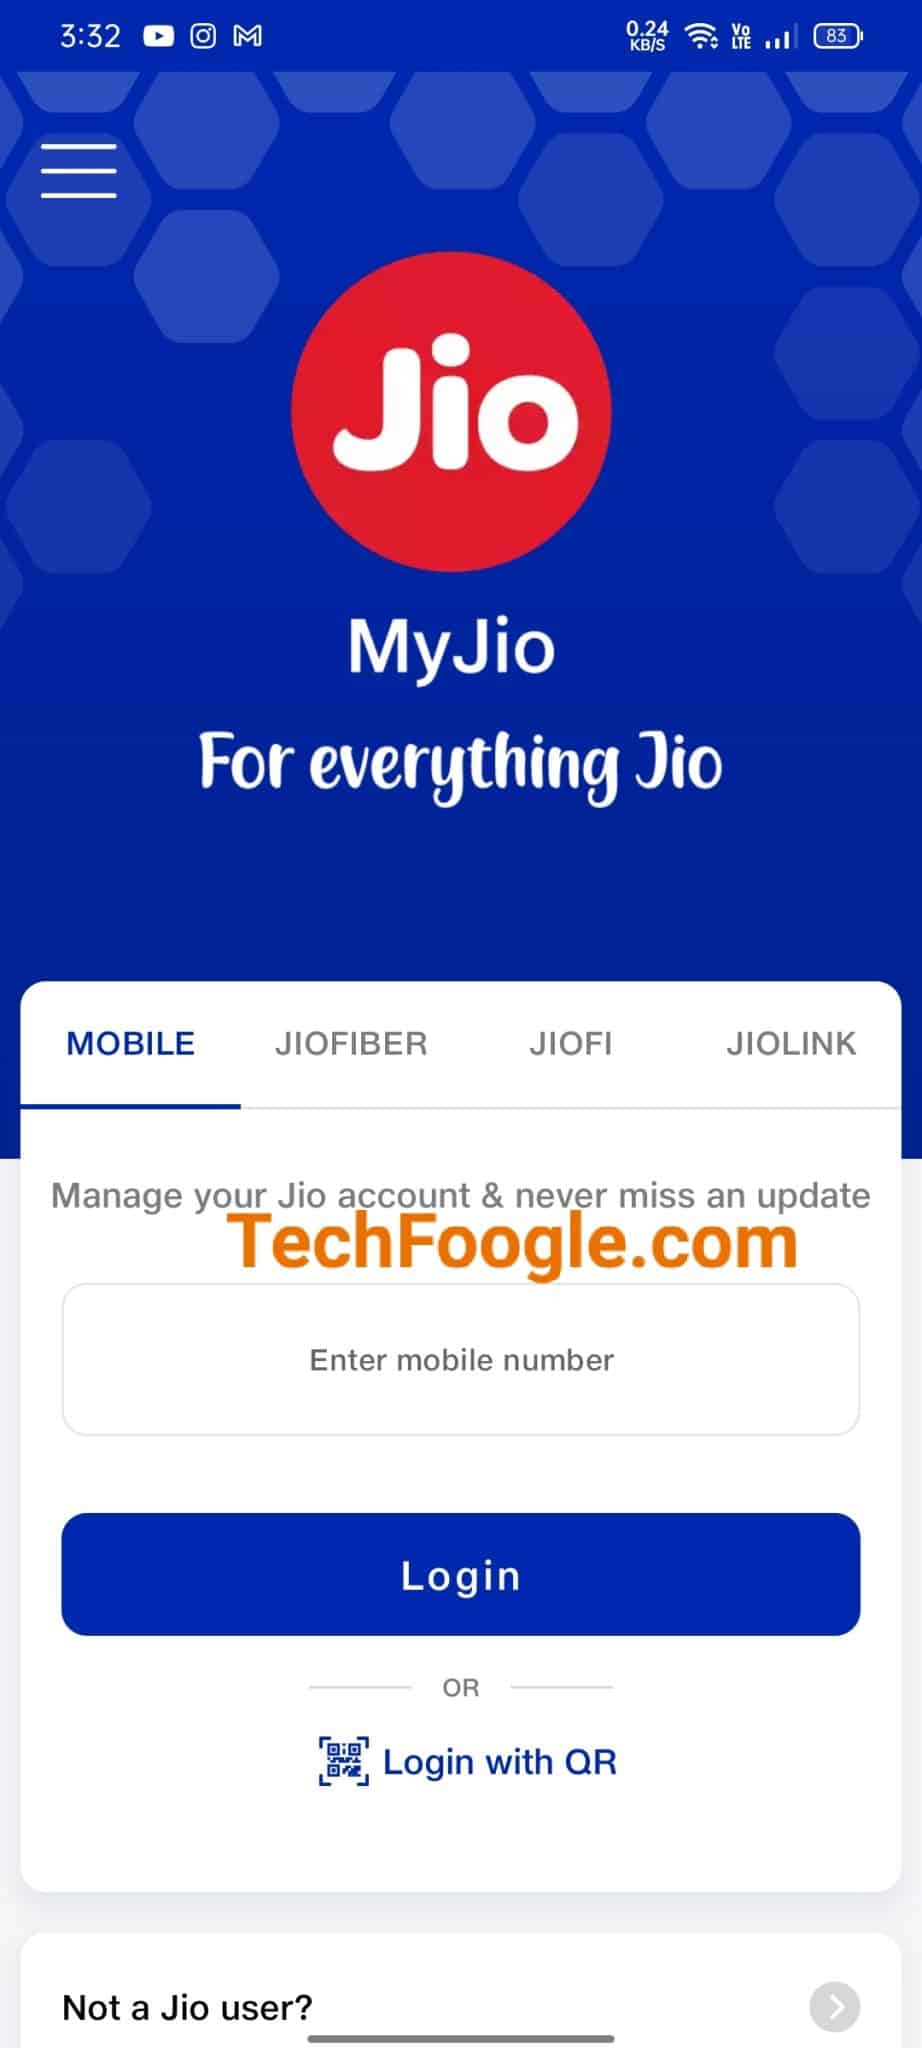 MyJio-app-step-2-techfoogle